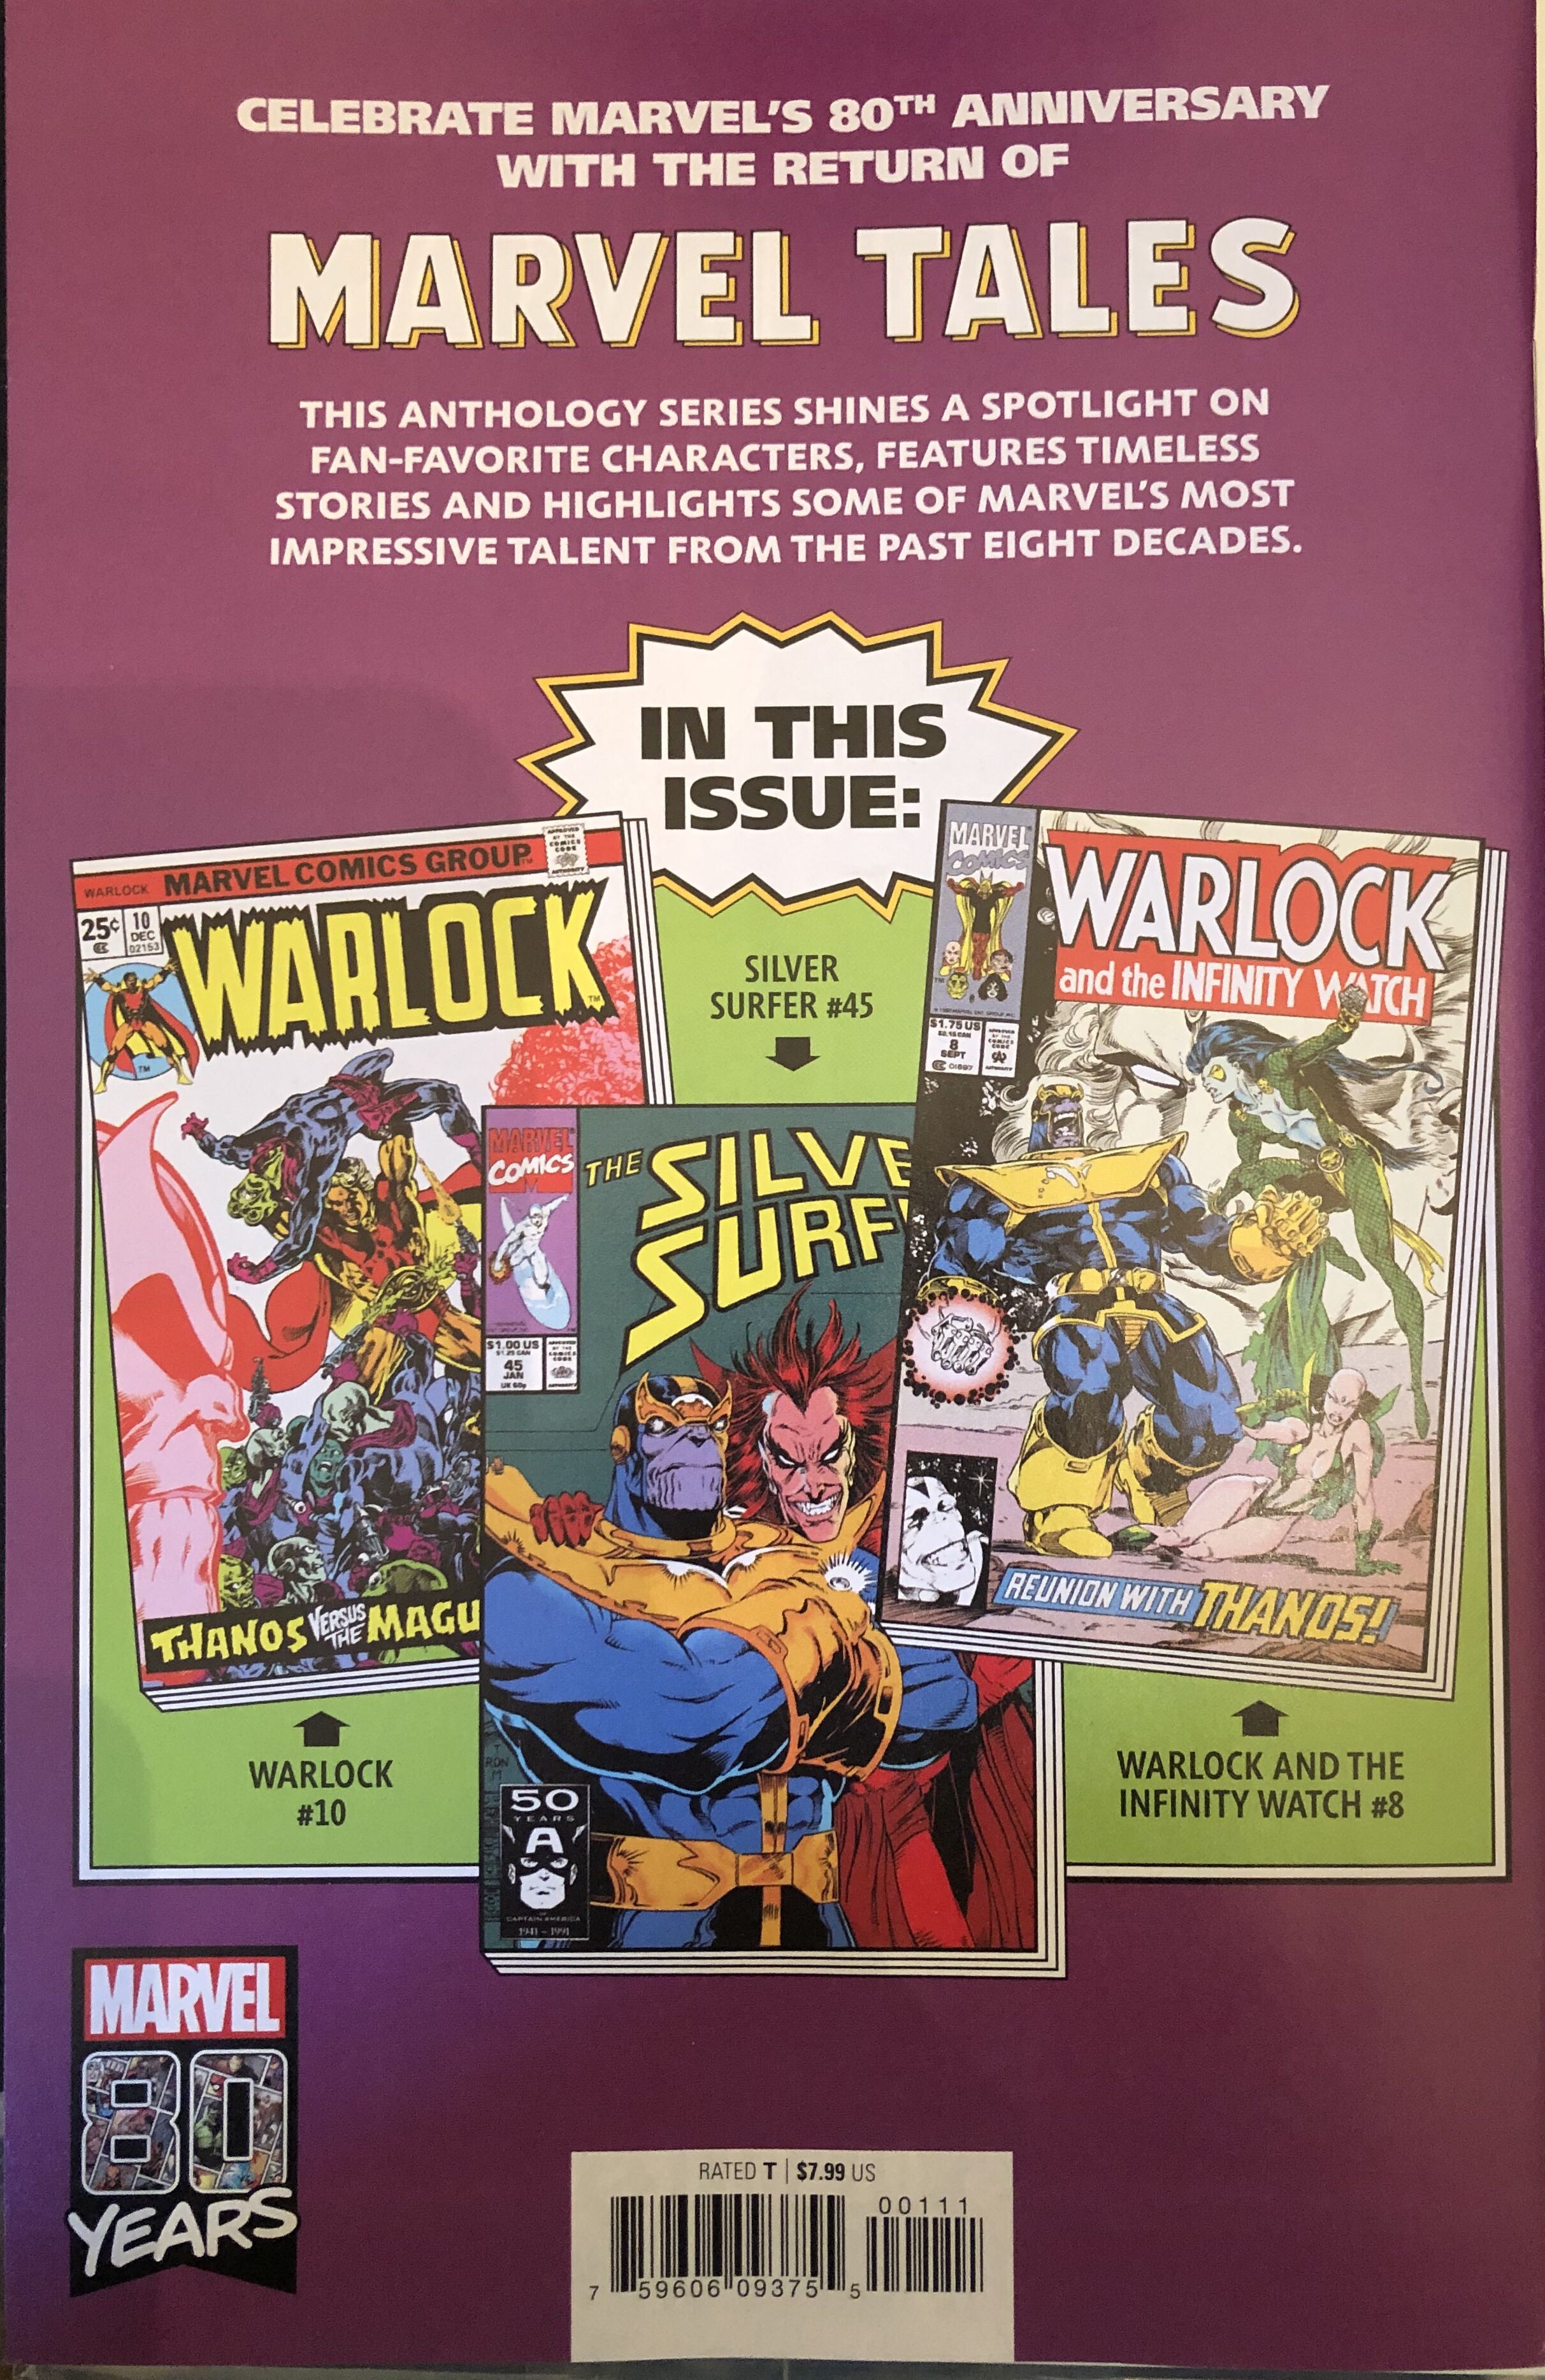 Marvel Tales: THANOS - Marvel (1 - Jun 2019) comic book collectible [Barcode 75960609375500111] - Main Image 2